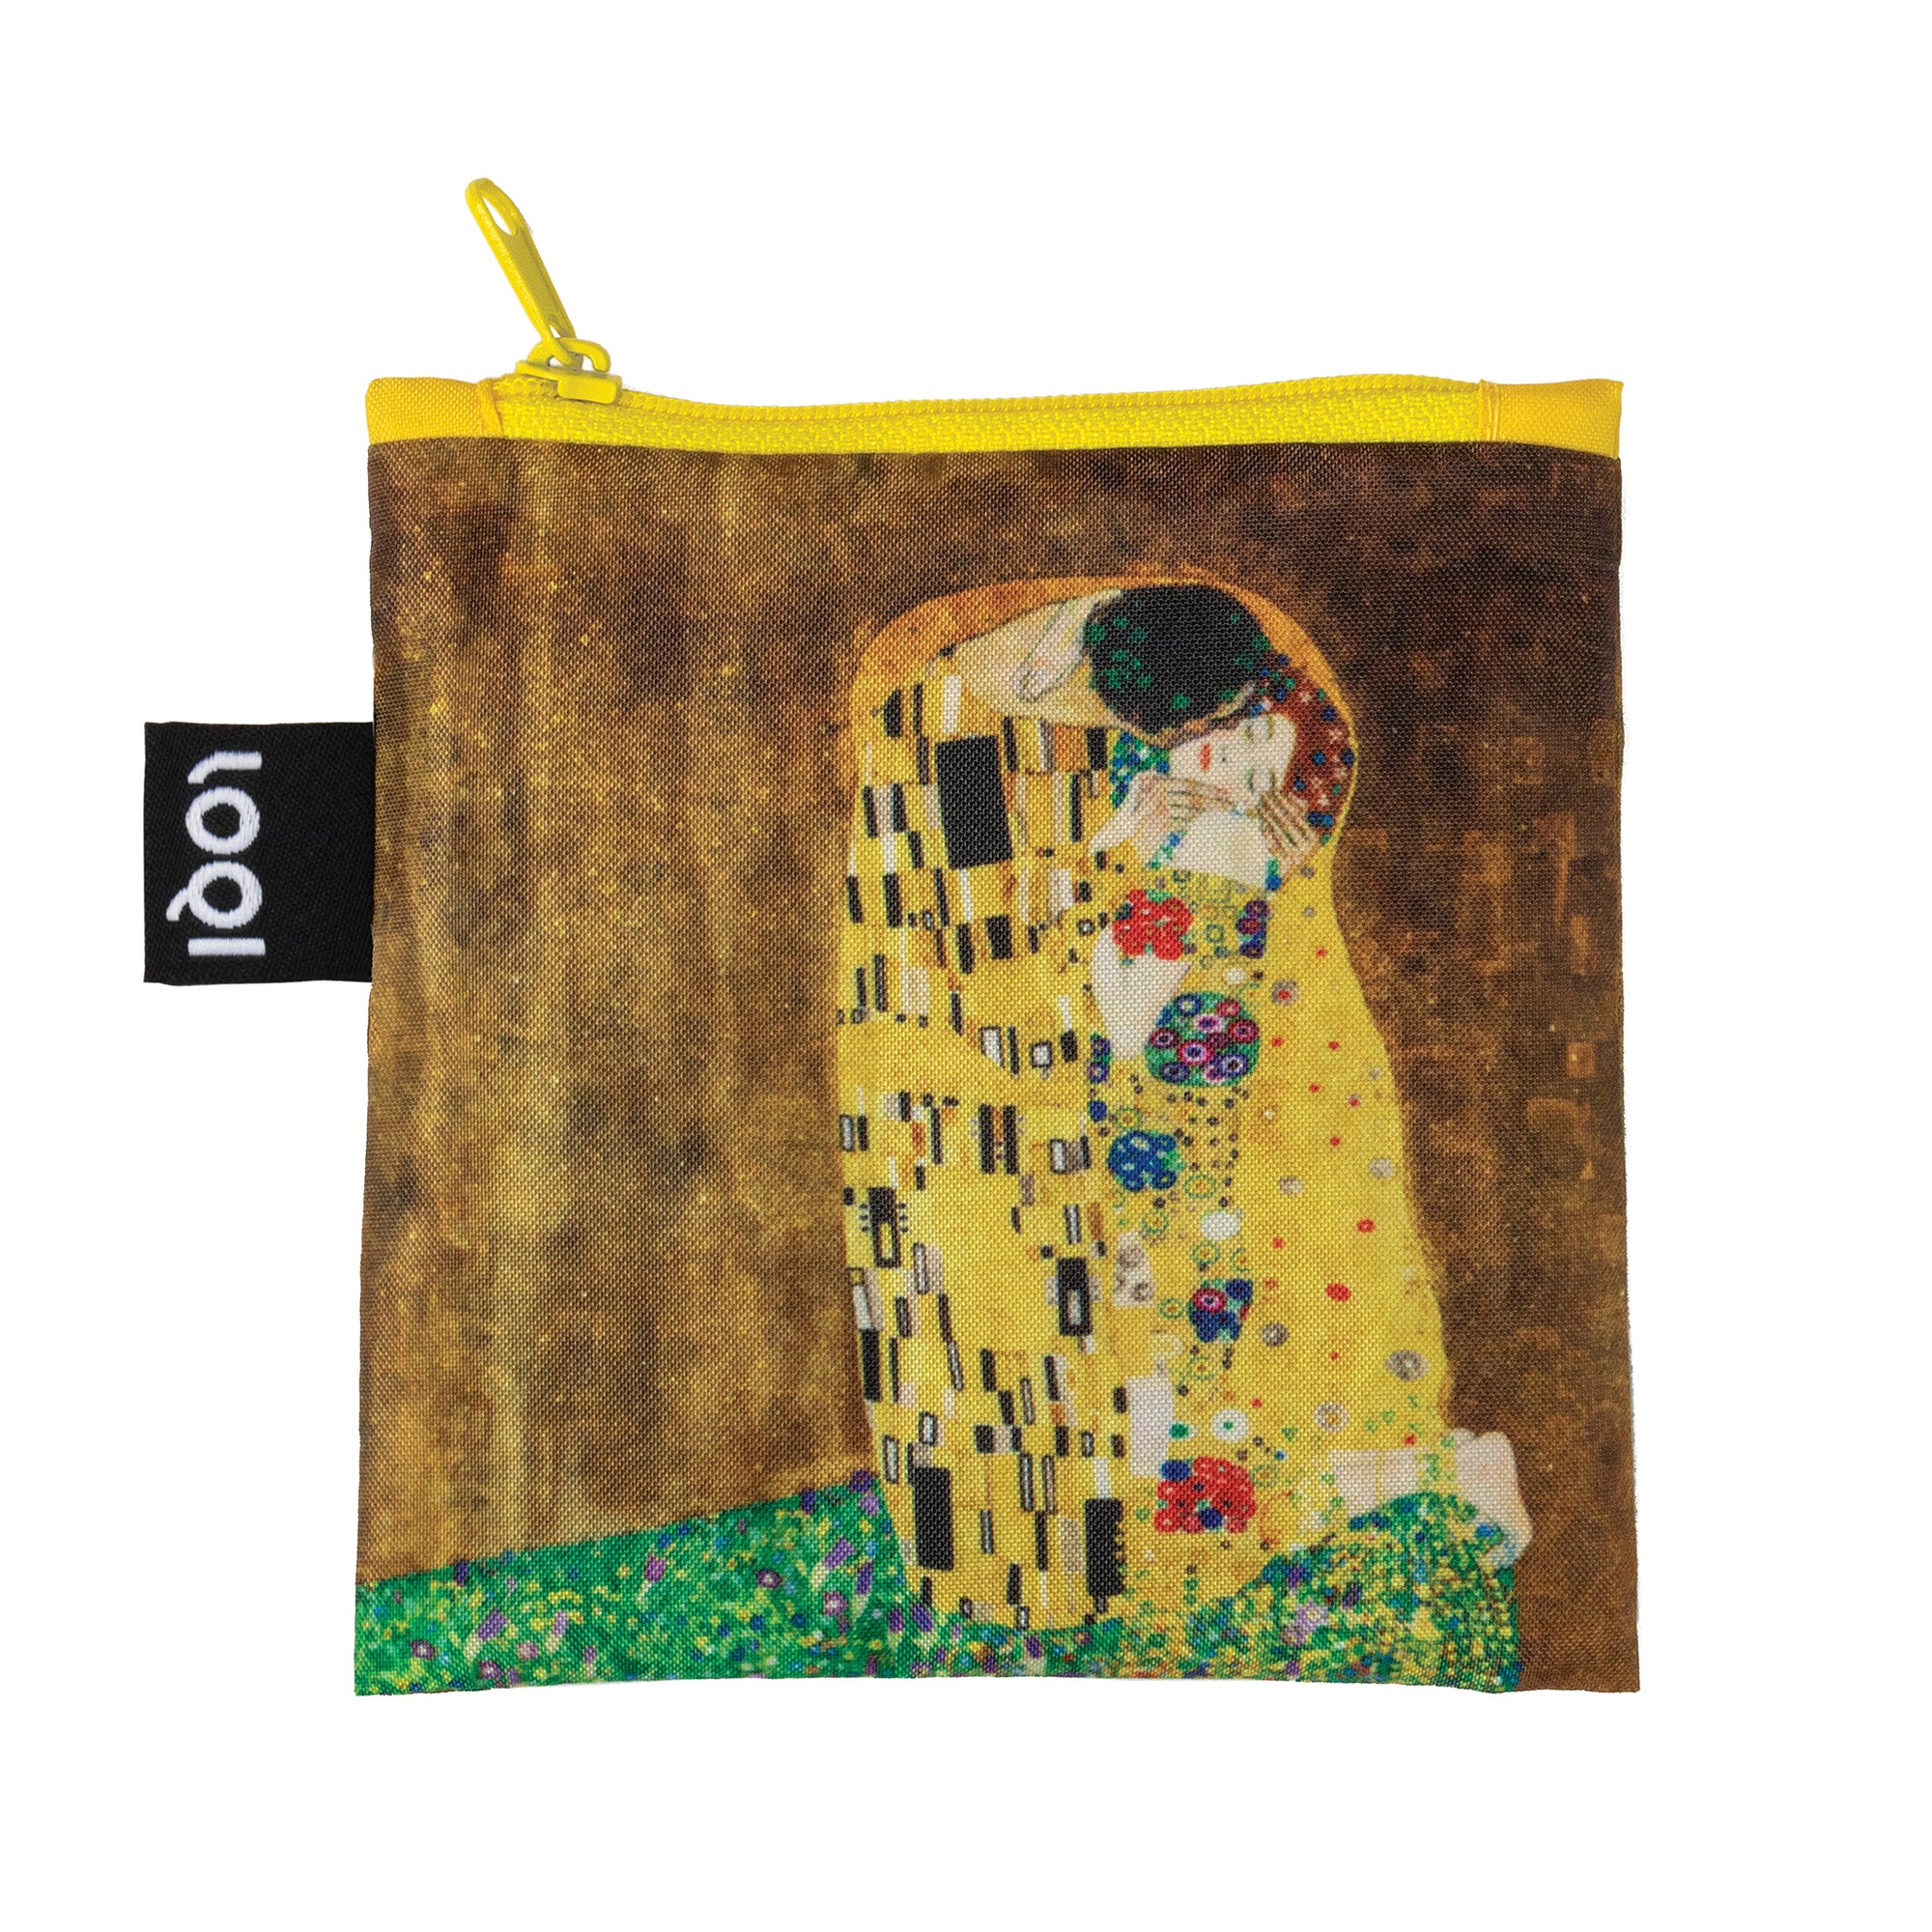 LOQI Bag, Claude Monet Wild Poppies